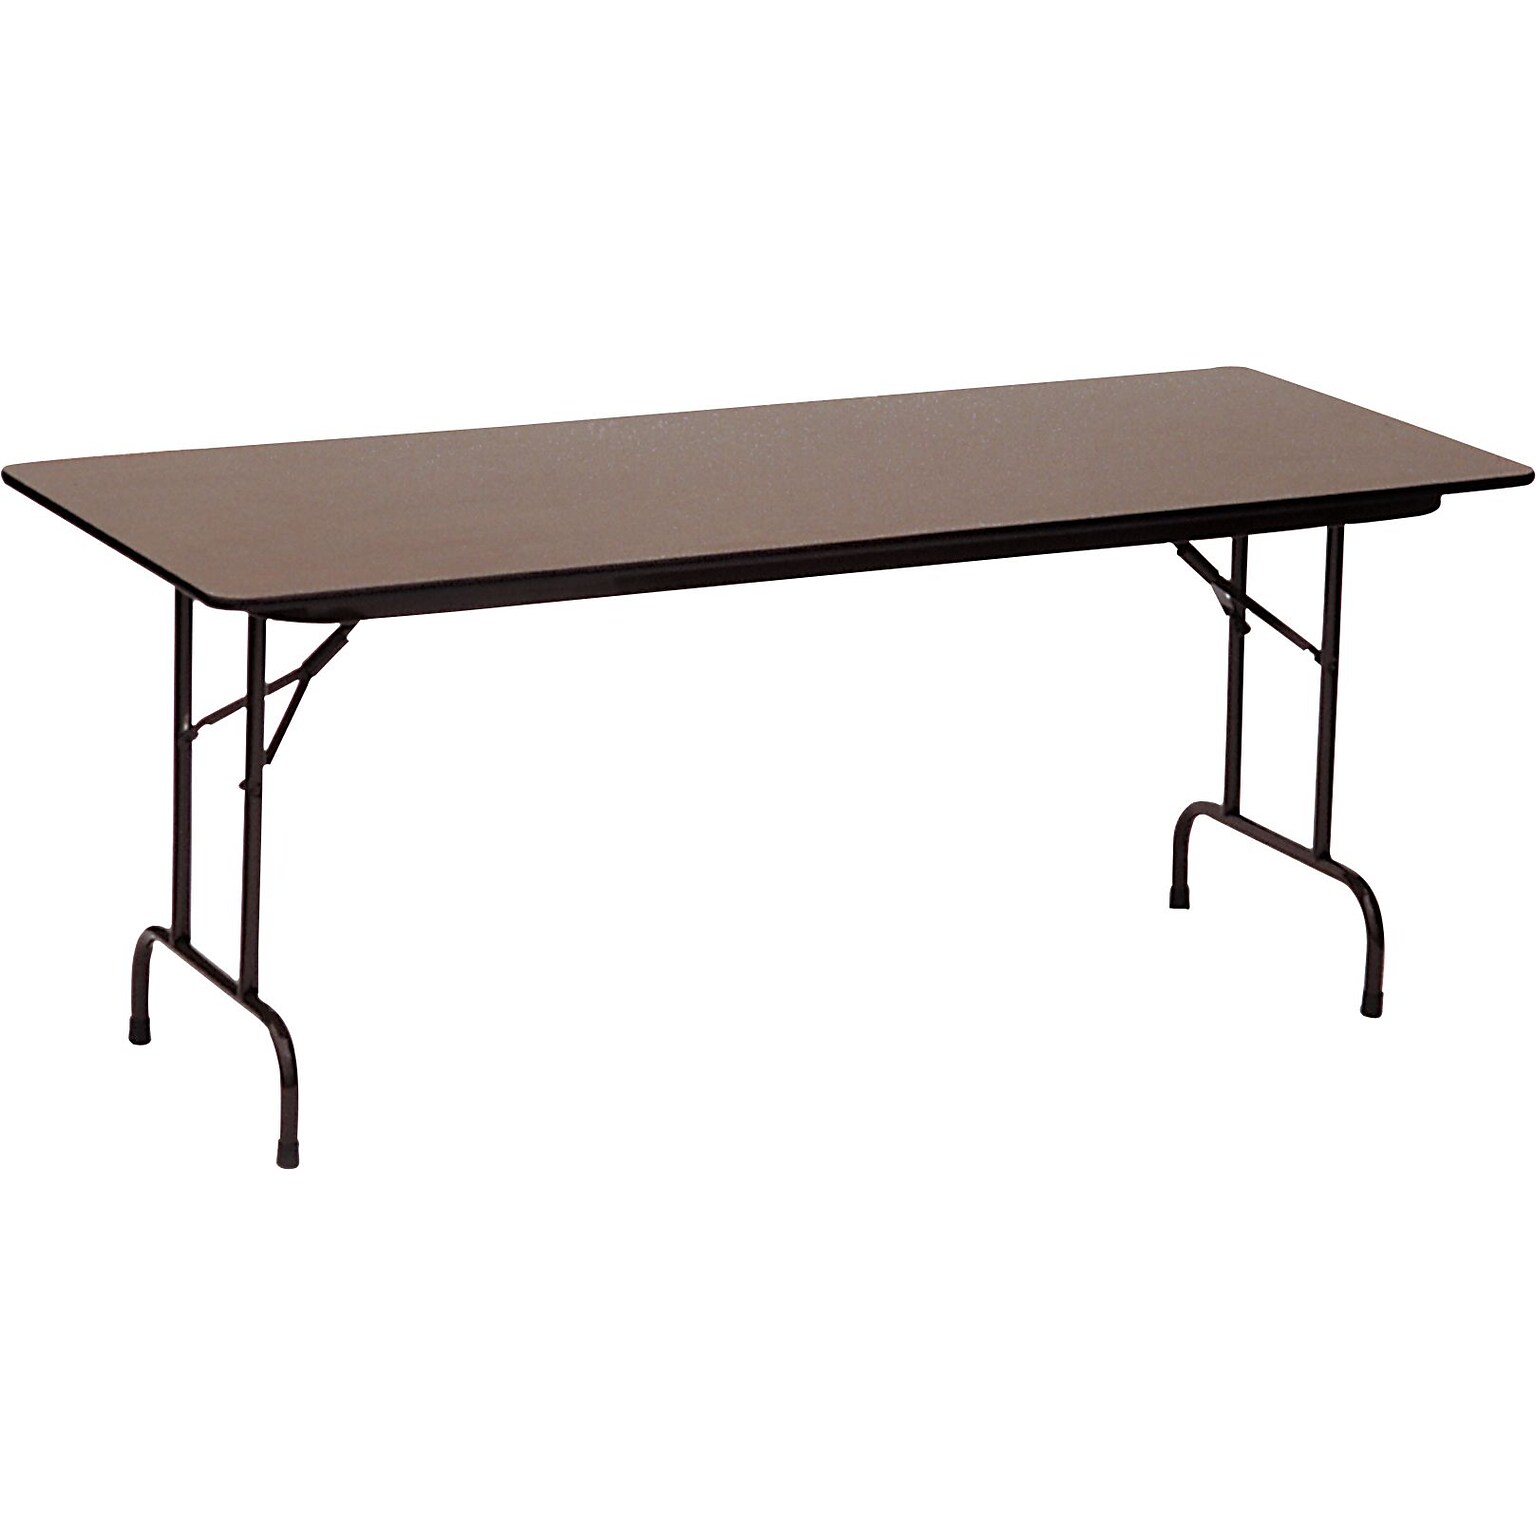 Correll® 30D x 72L Folding table; Walnut Melamine Laminate Top